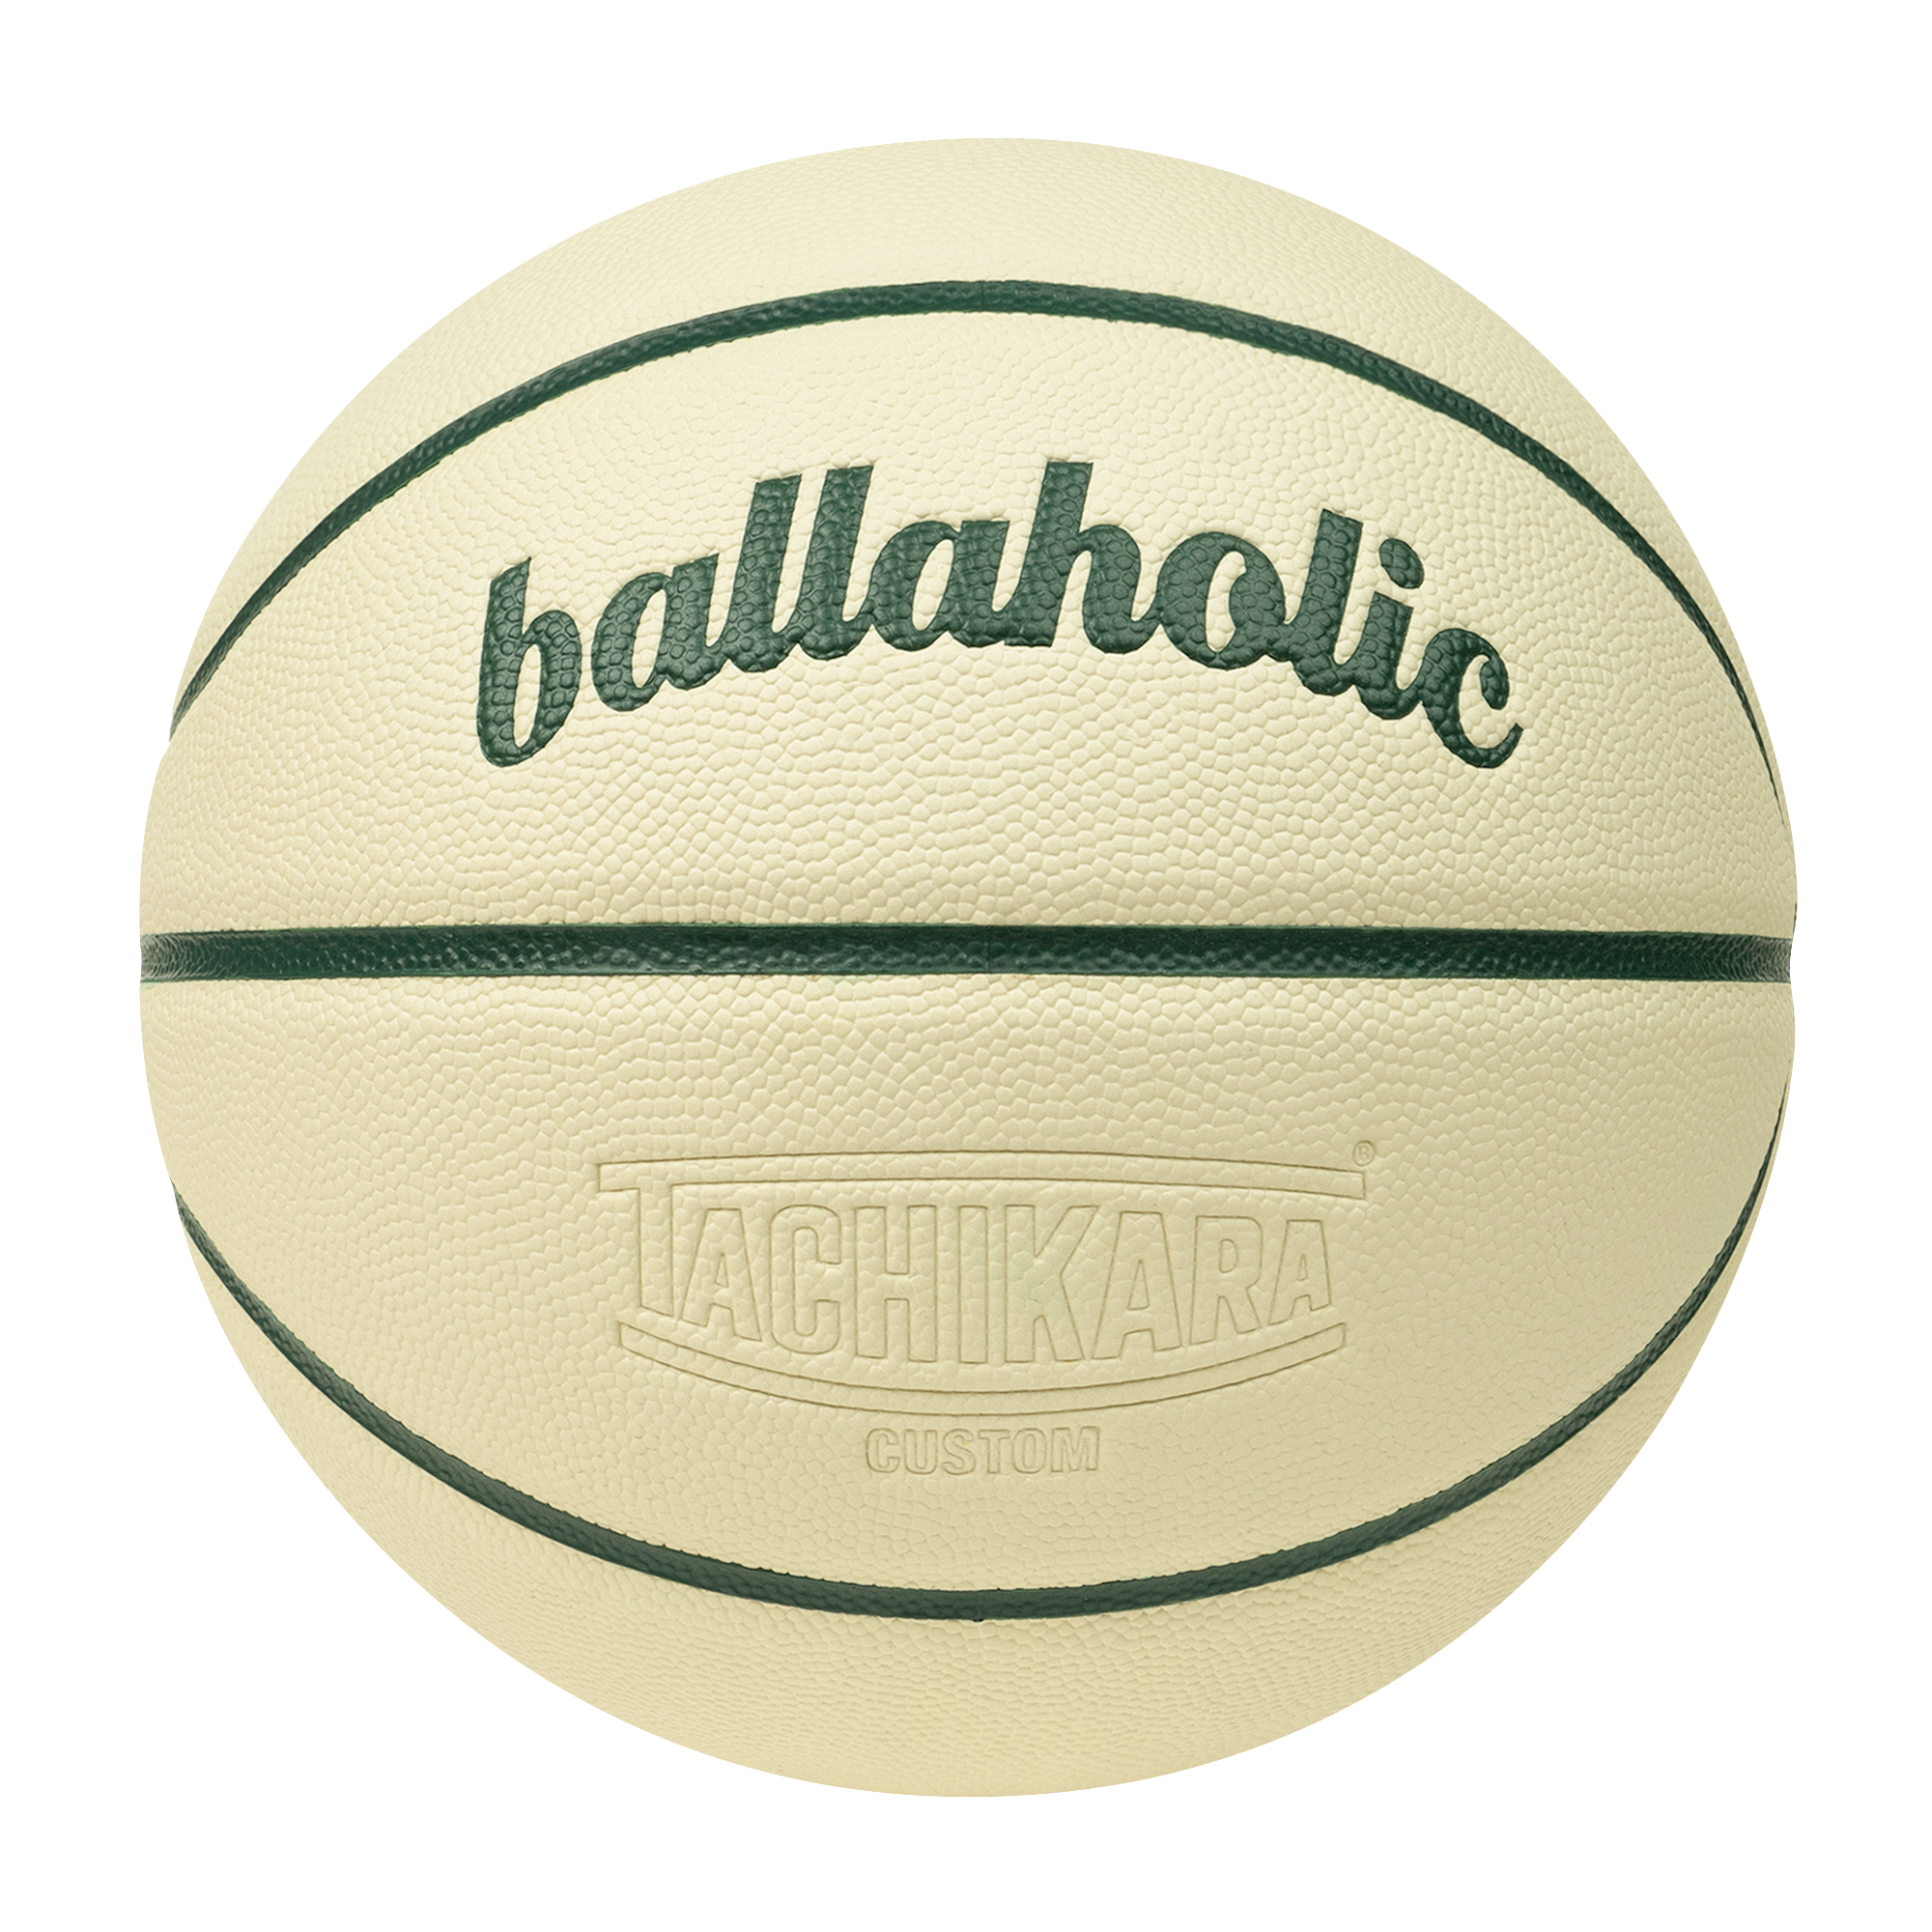 Playground Basketball / ballaholic x TACHIKARA